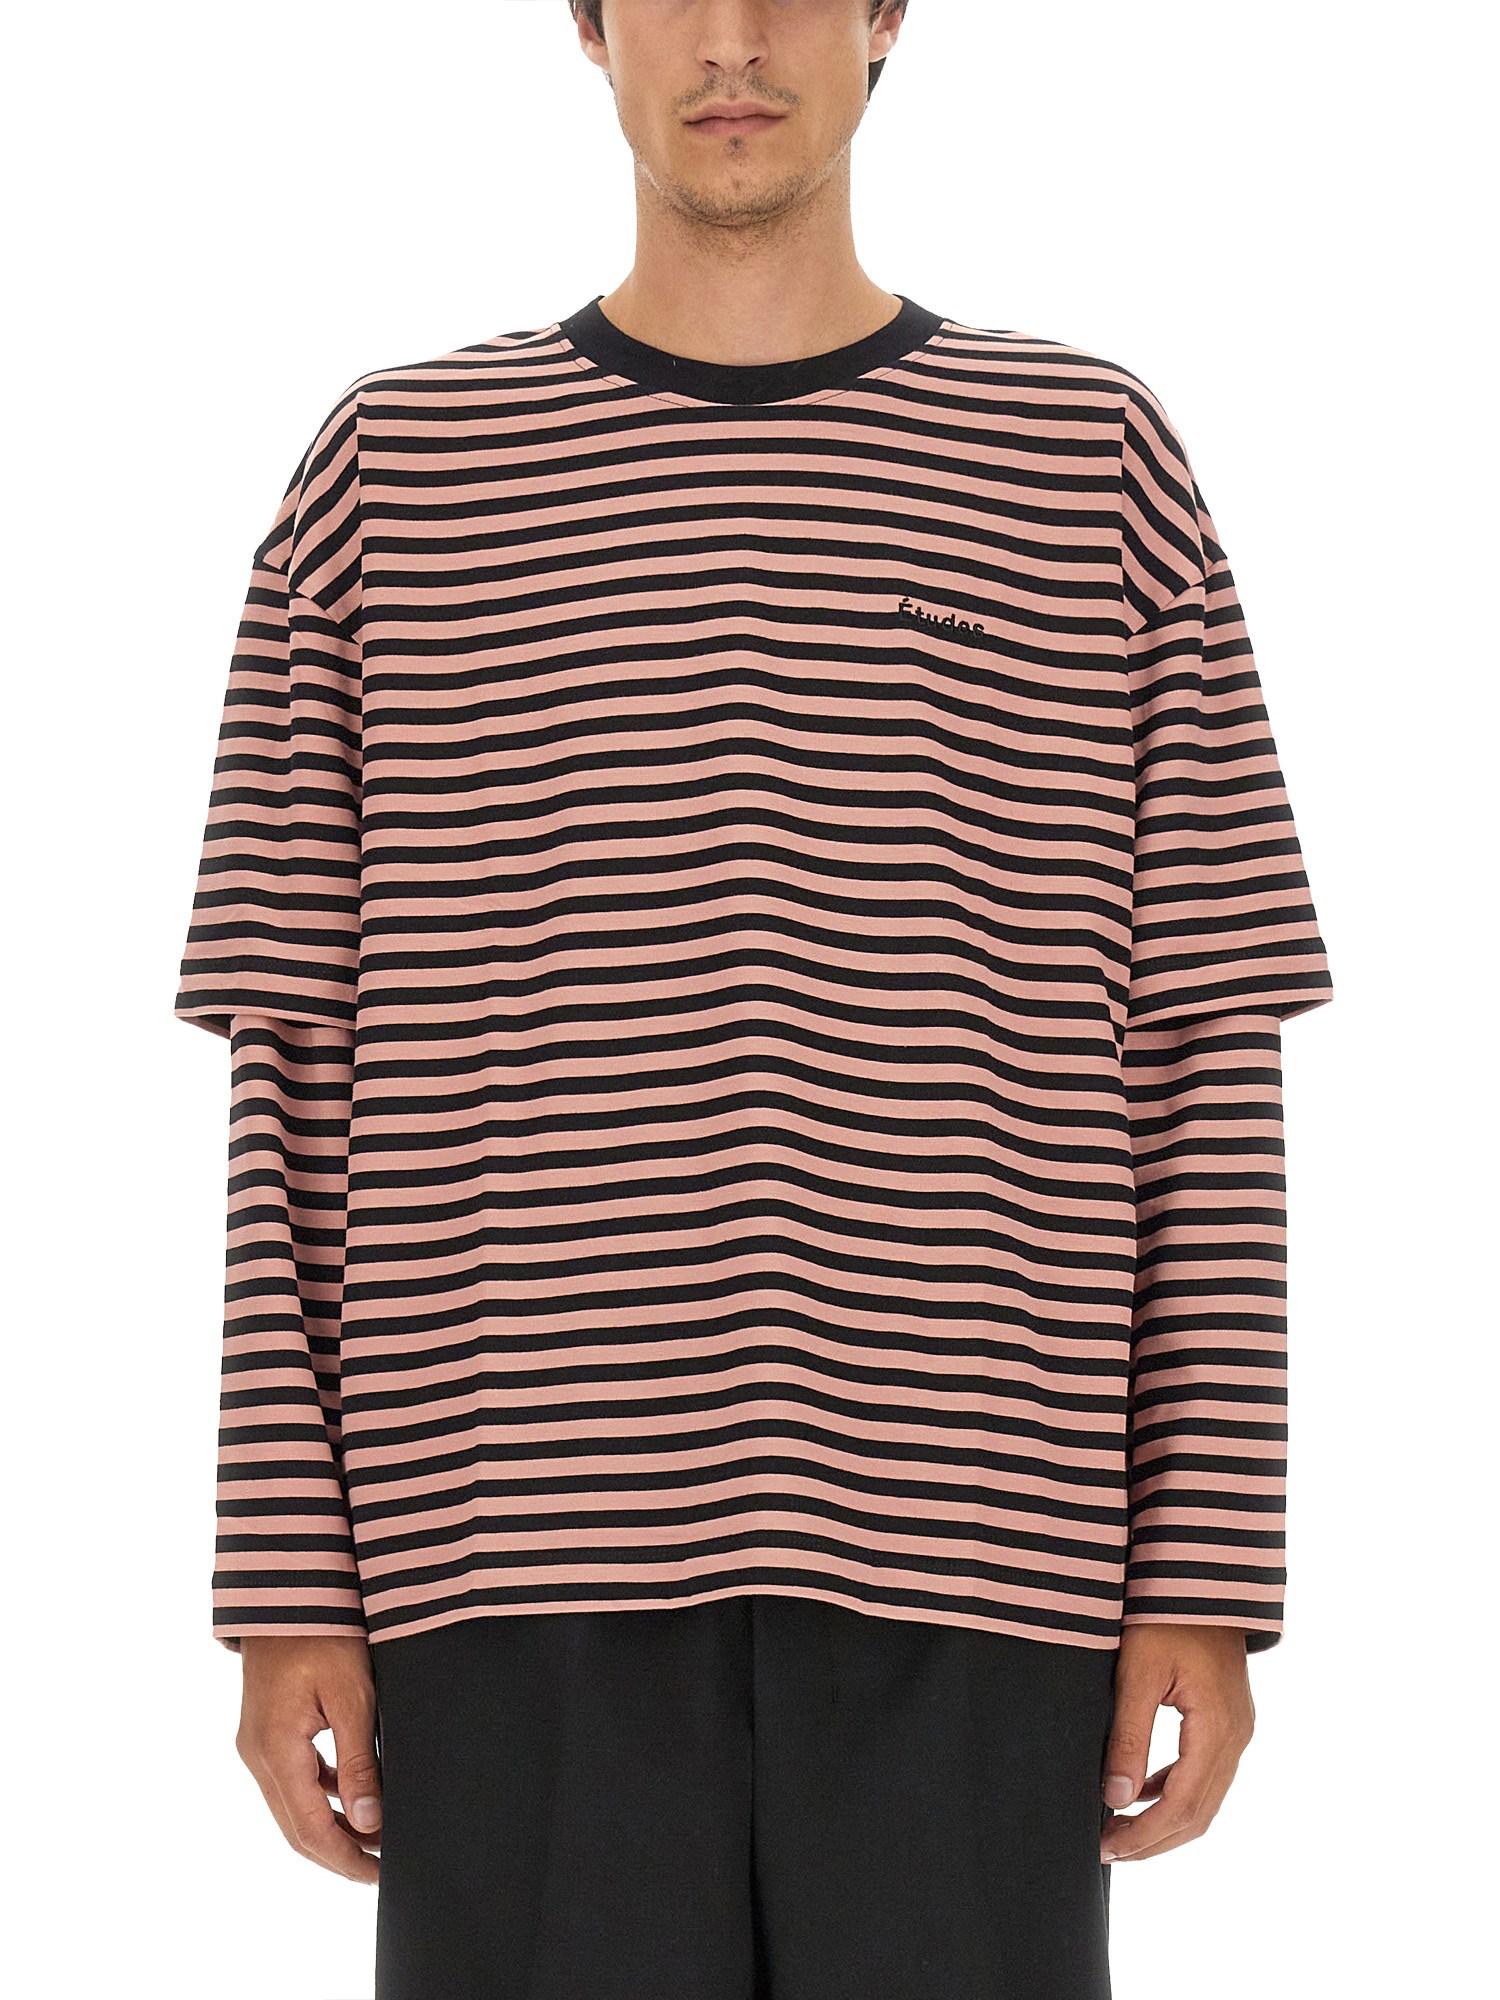 Etudes Studio T-shirt With Stripe Pattern In Multicolour